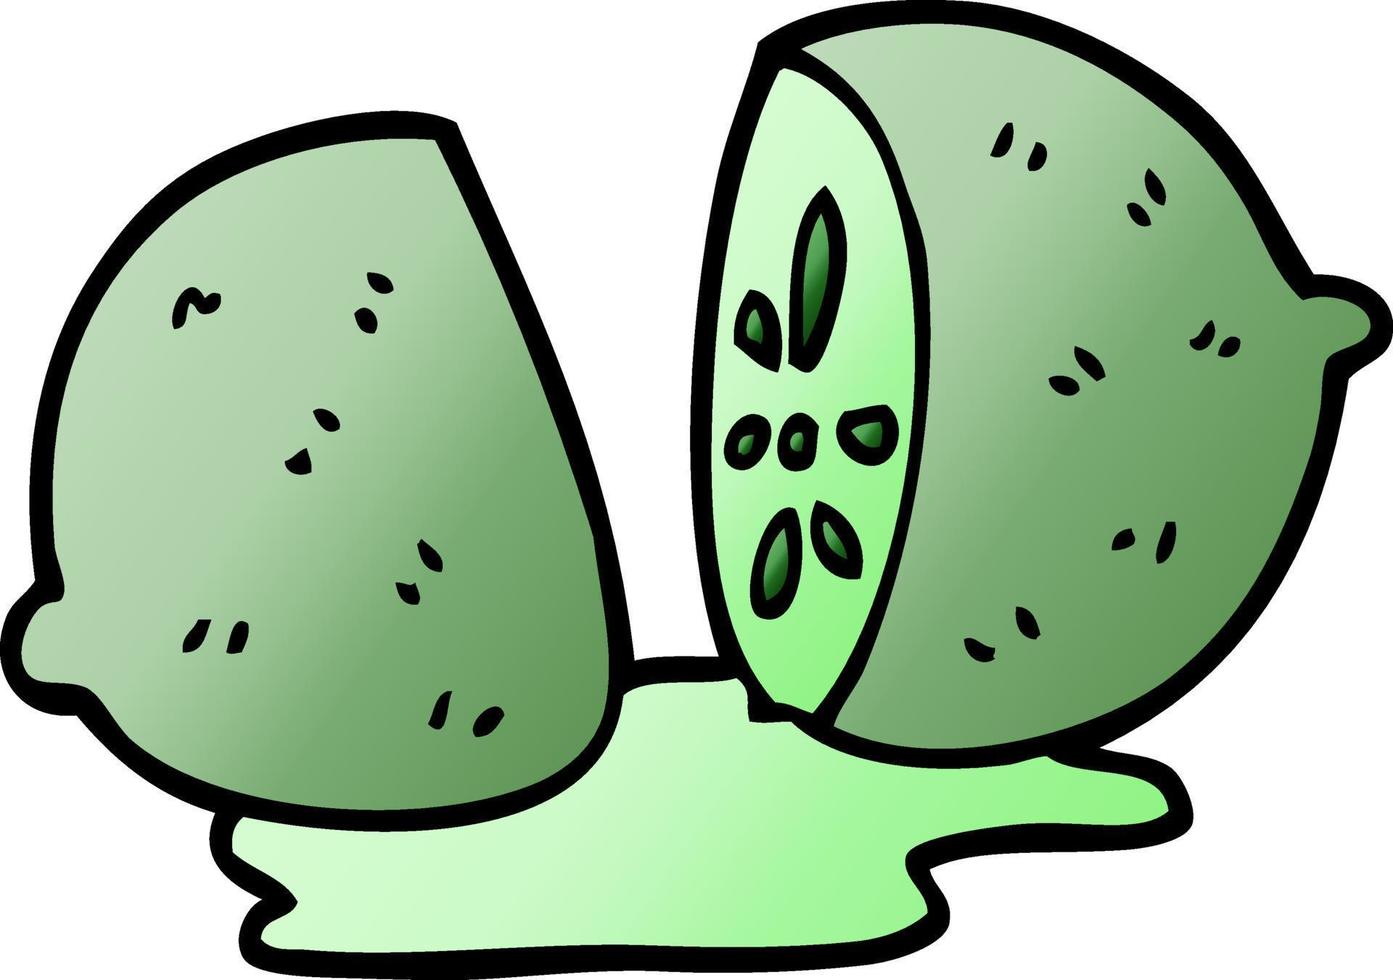 cartone animato doodle agrumi vettore